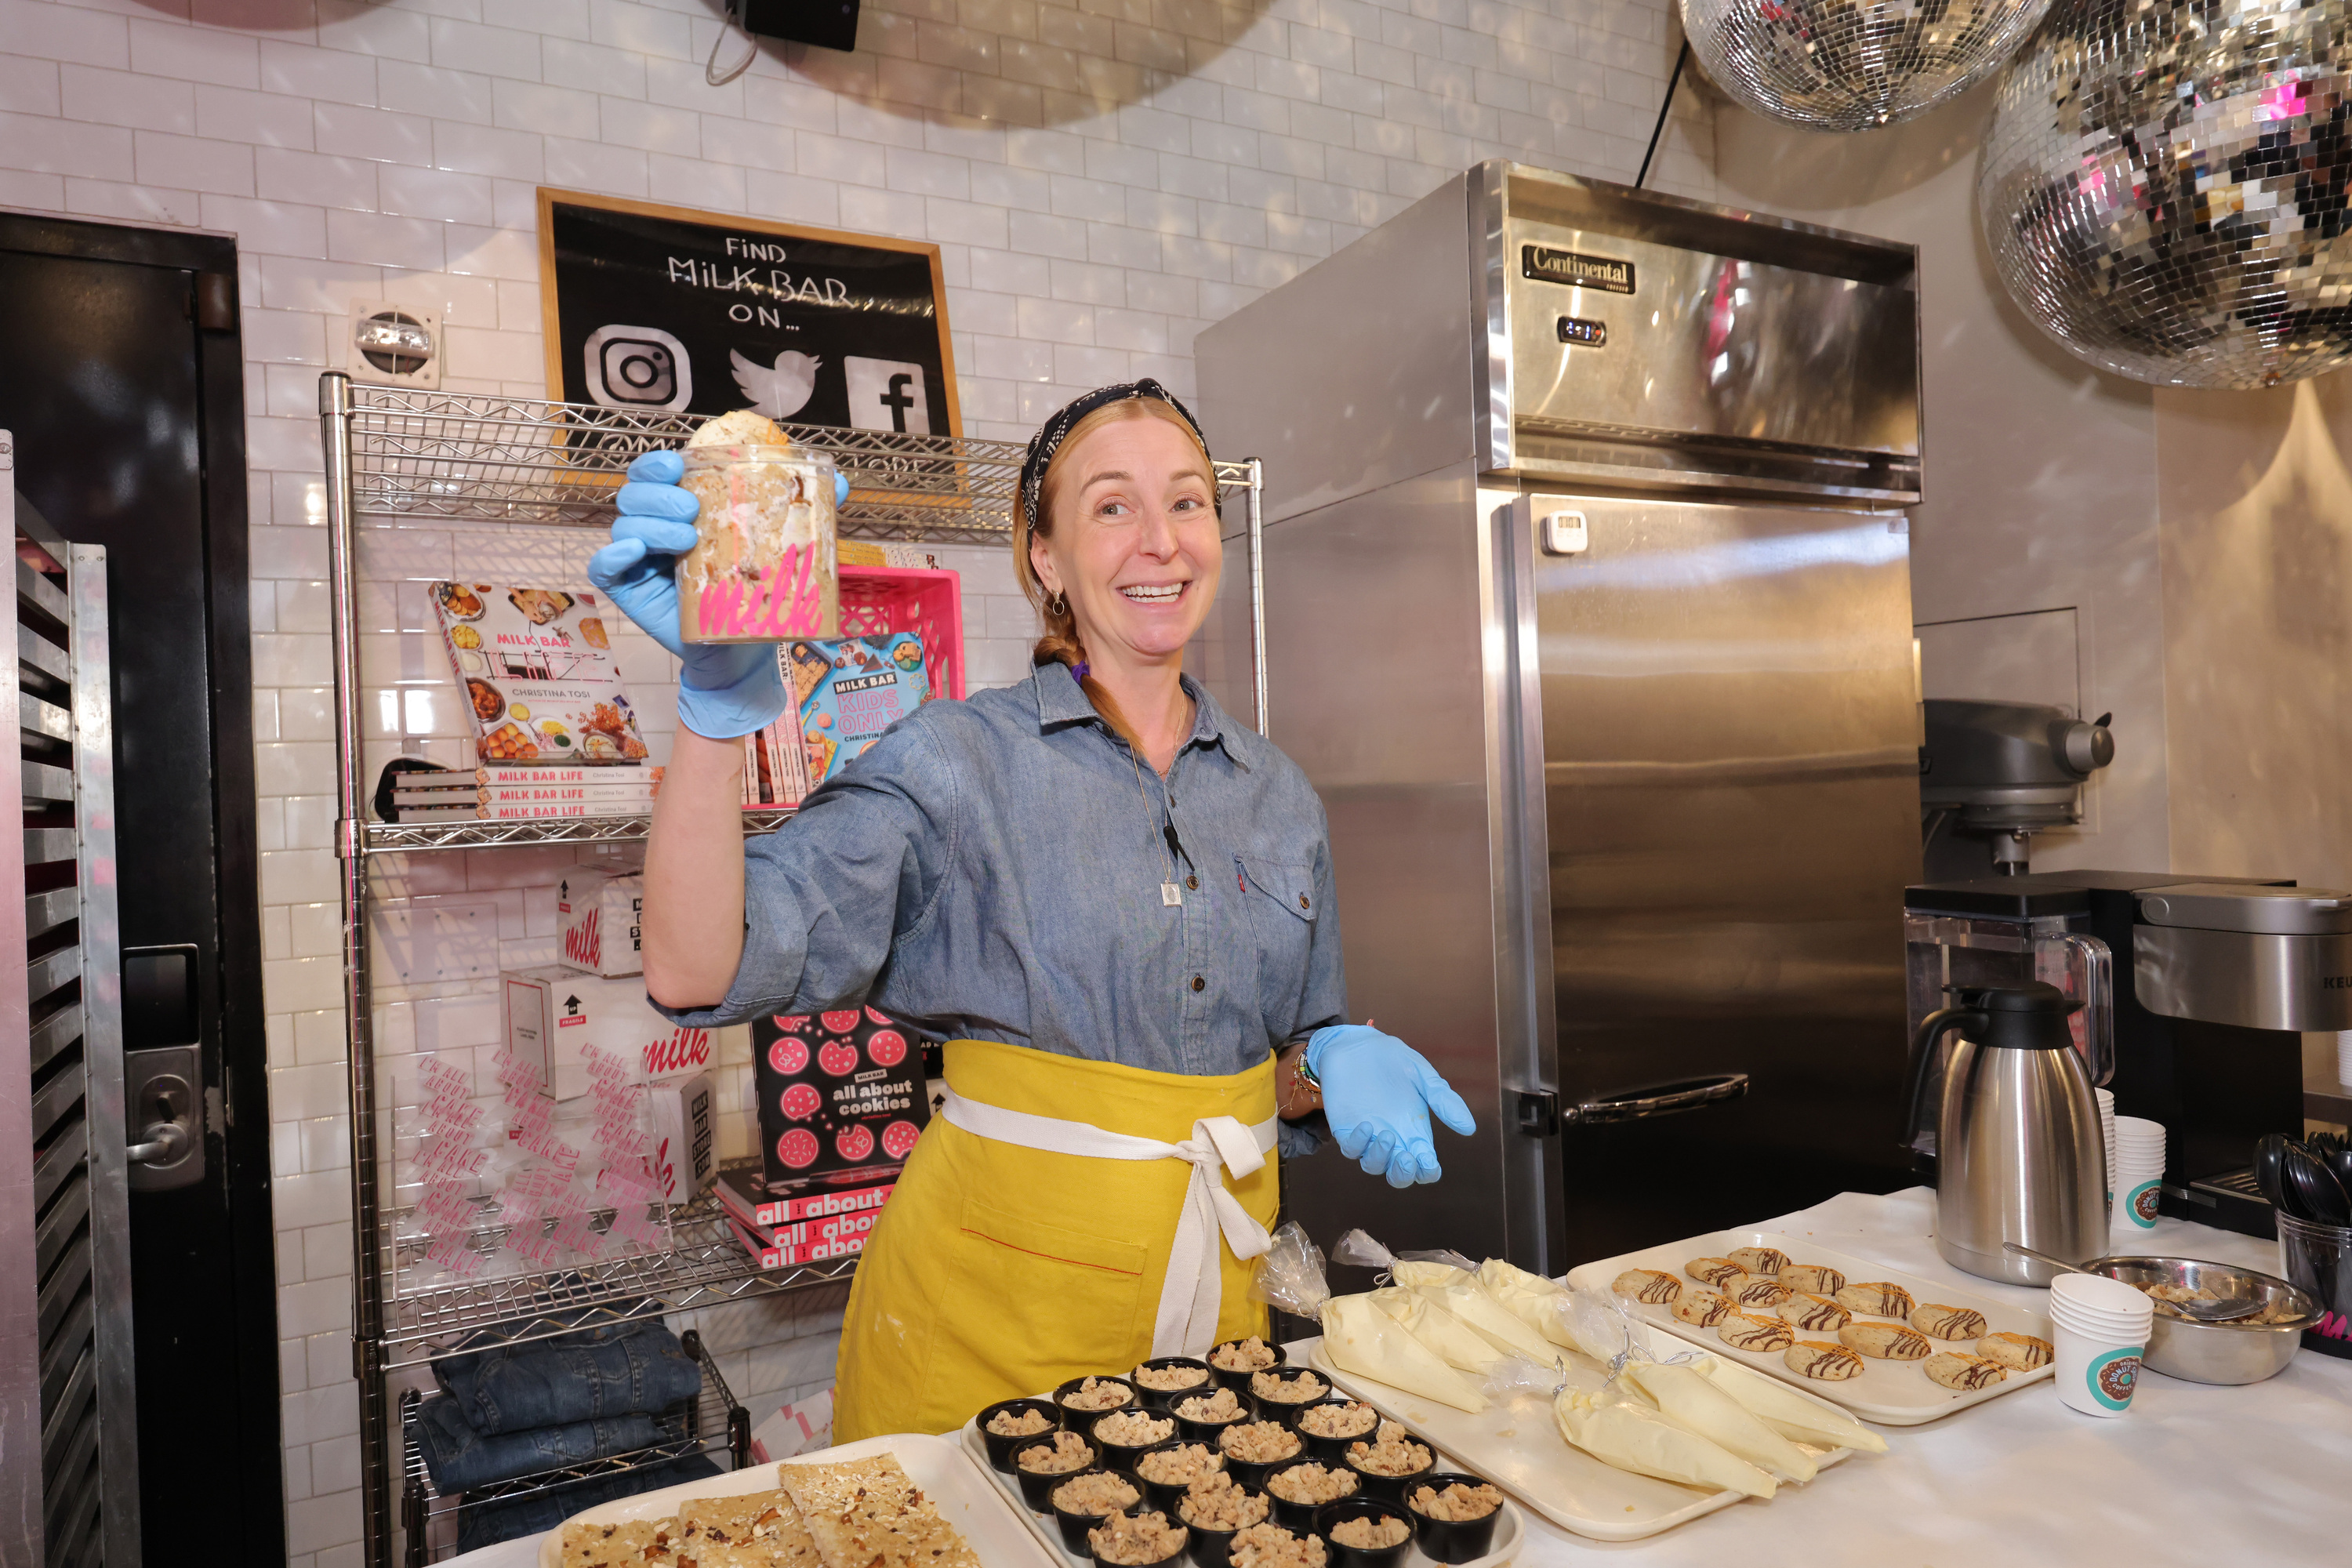 Milk Bar: Christina Tosi's desserts, cakes, cookies delivered